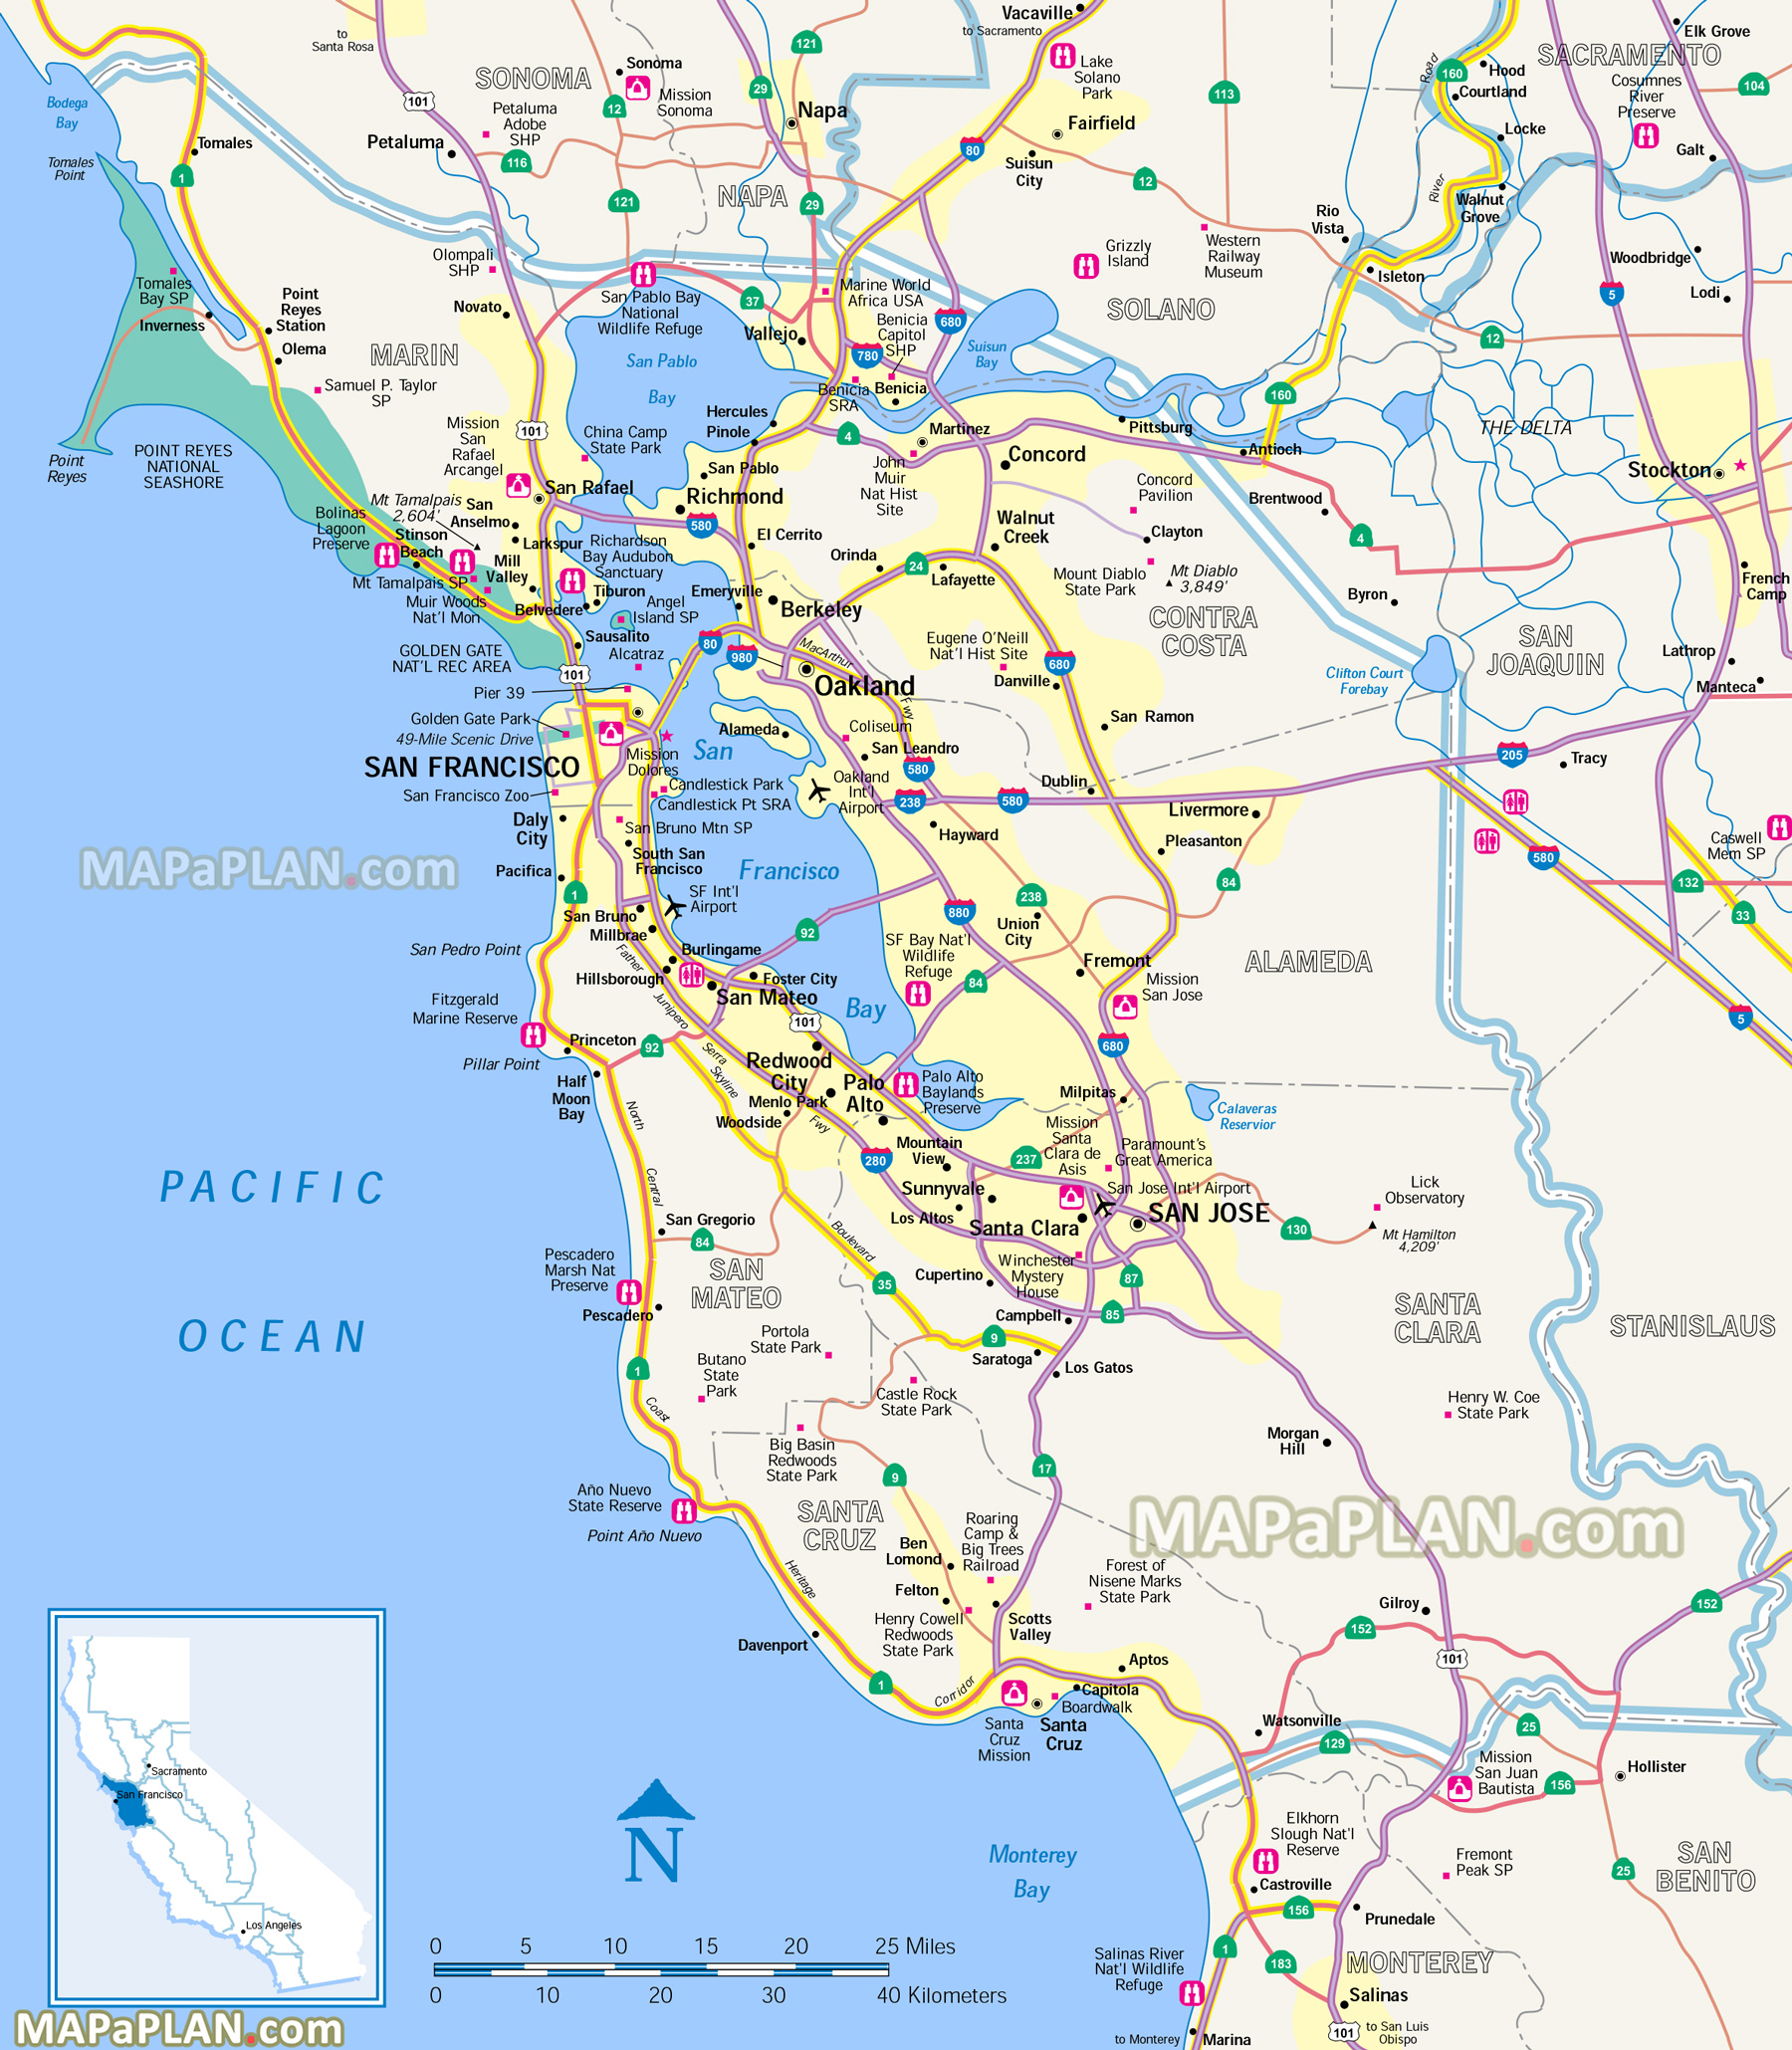 san francisco penisula surrounding bay area northern california cities sausalito zoo pier 39 San Francisco top tourist attractions map